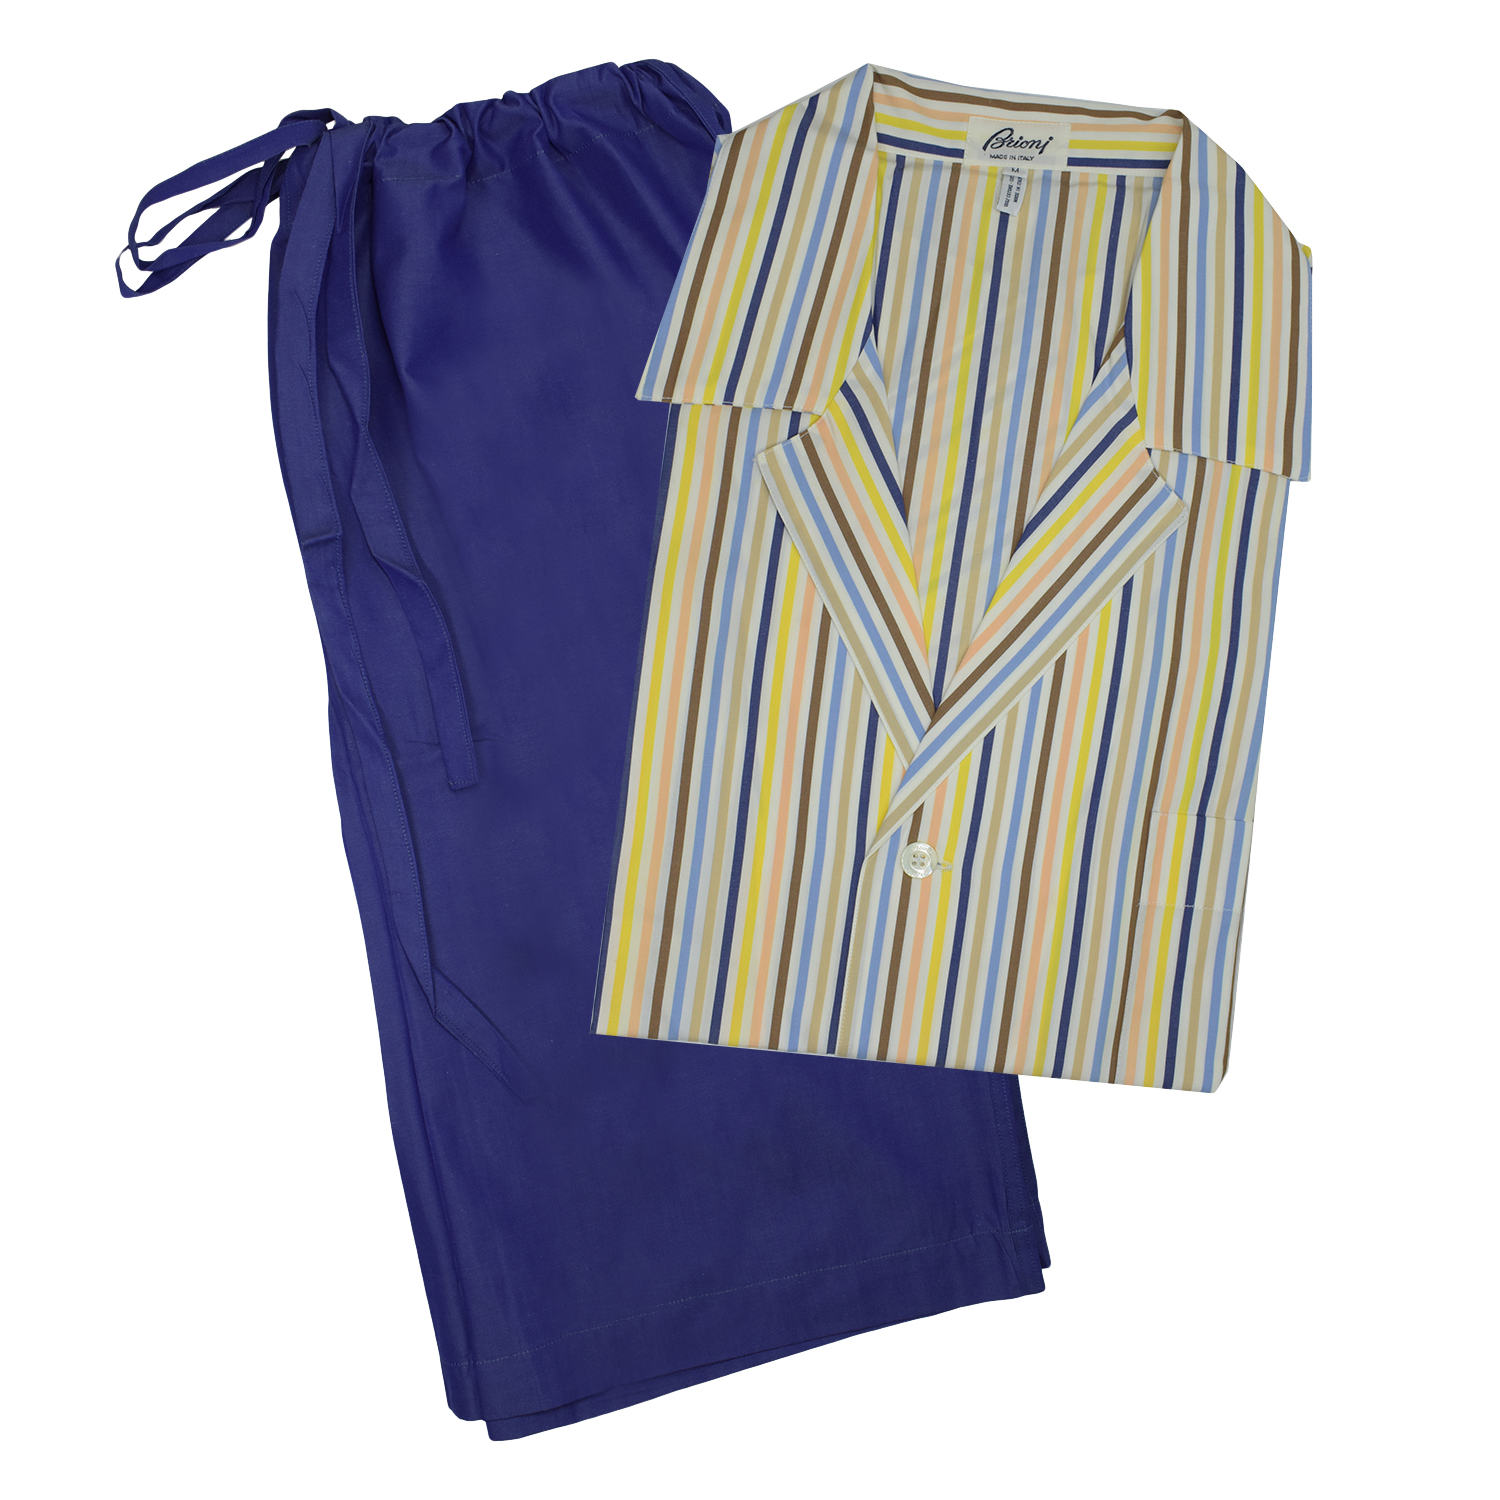 Brioni Men's Multi Colored Striped Shorts Pajamas (M) Blue